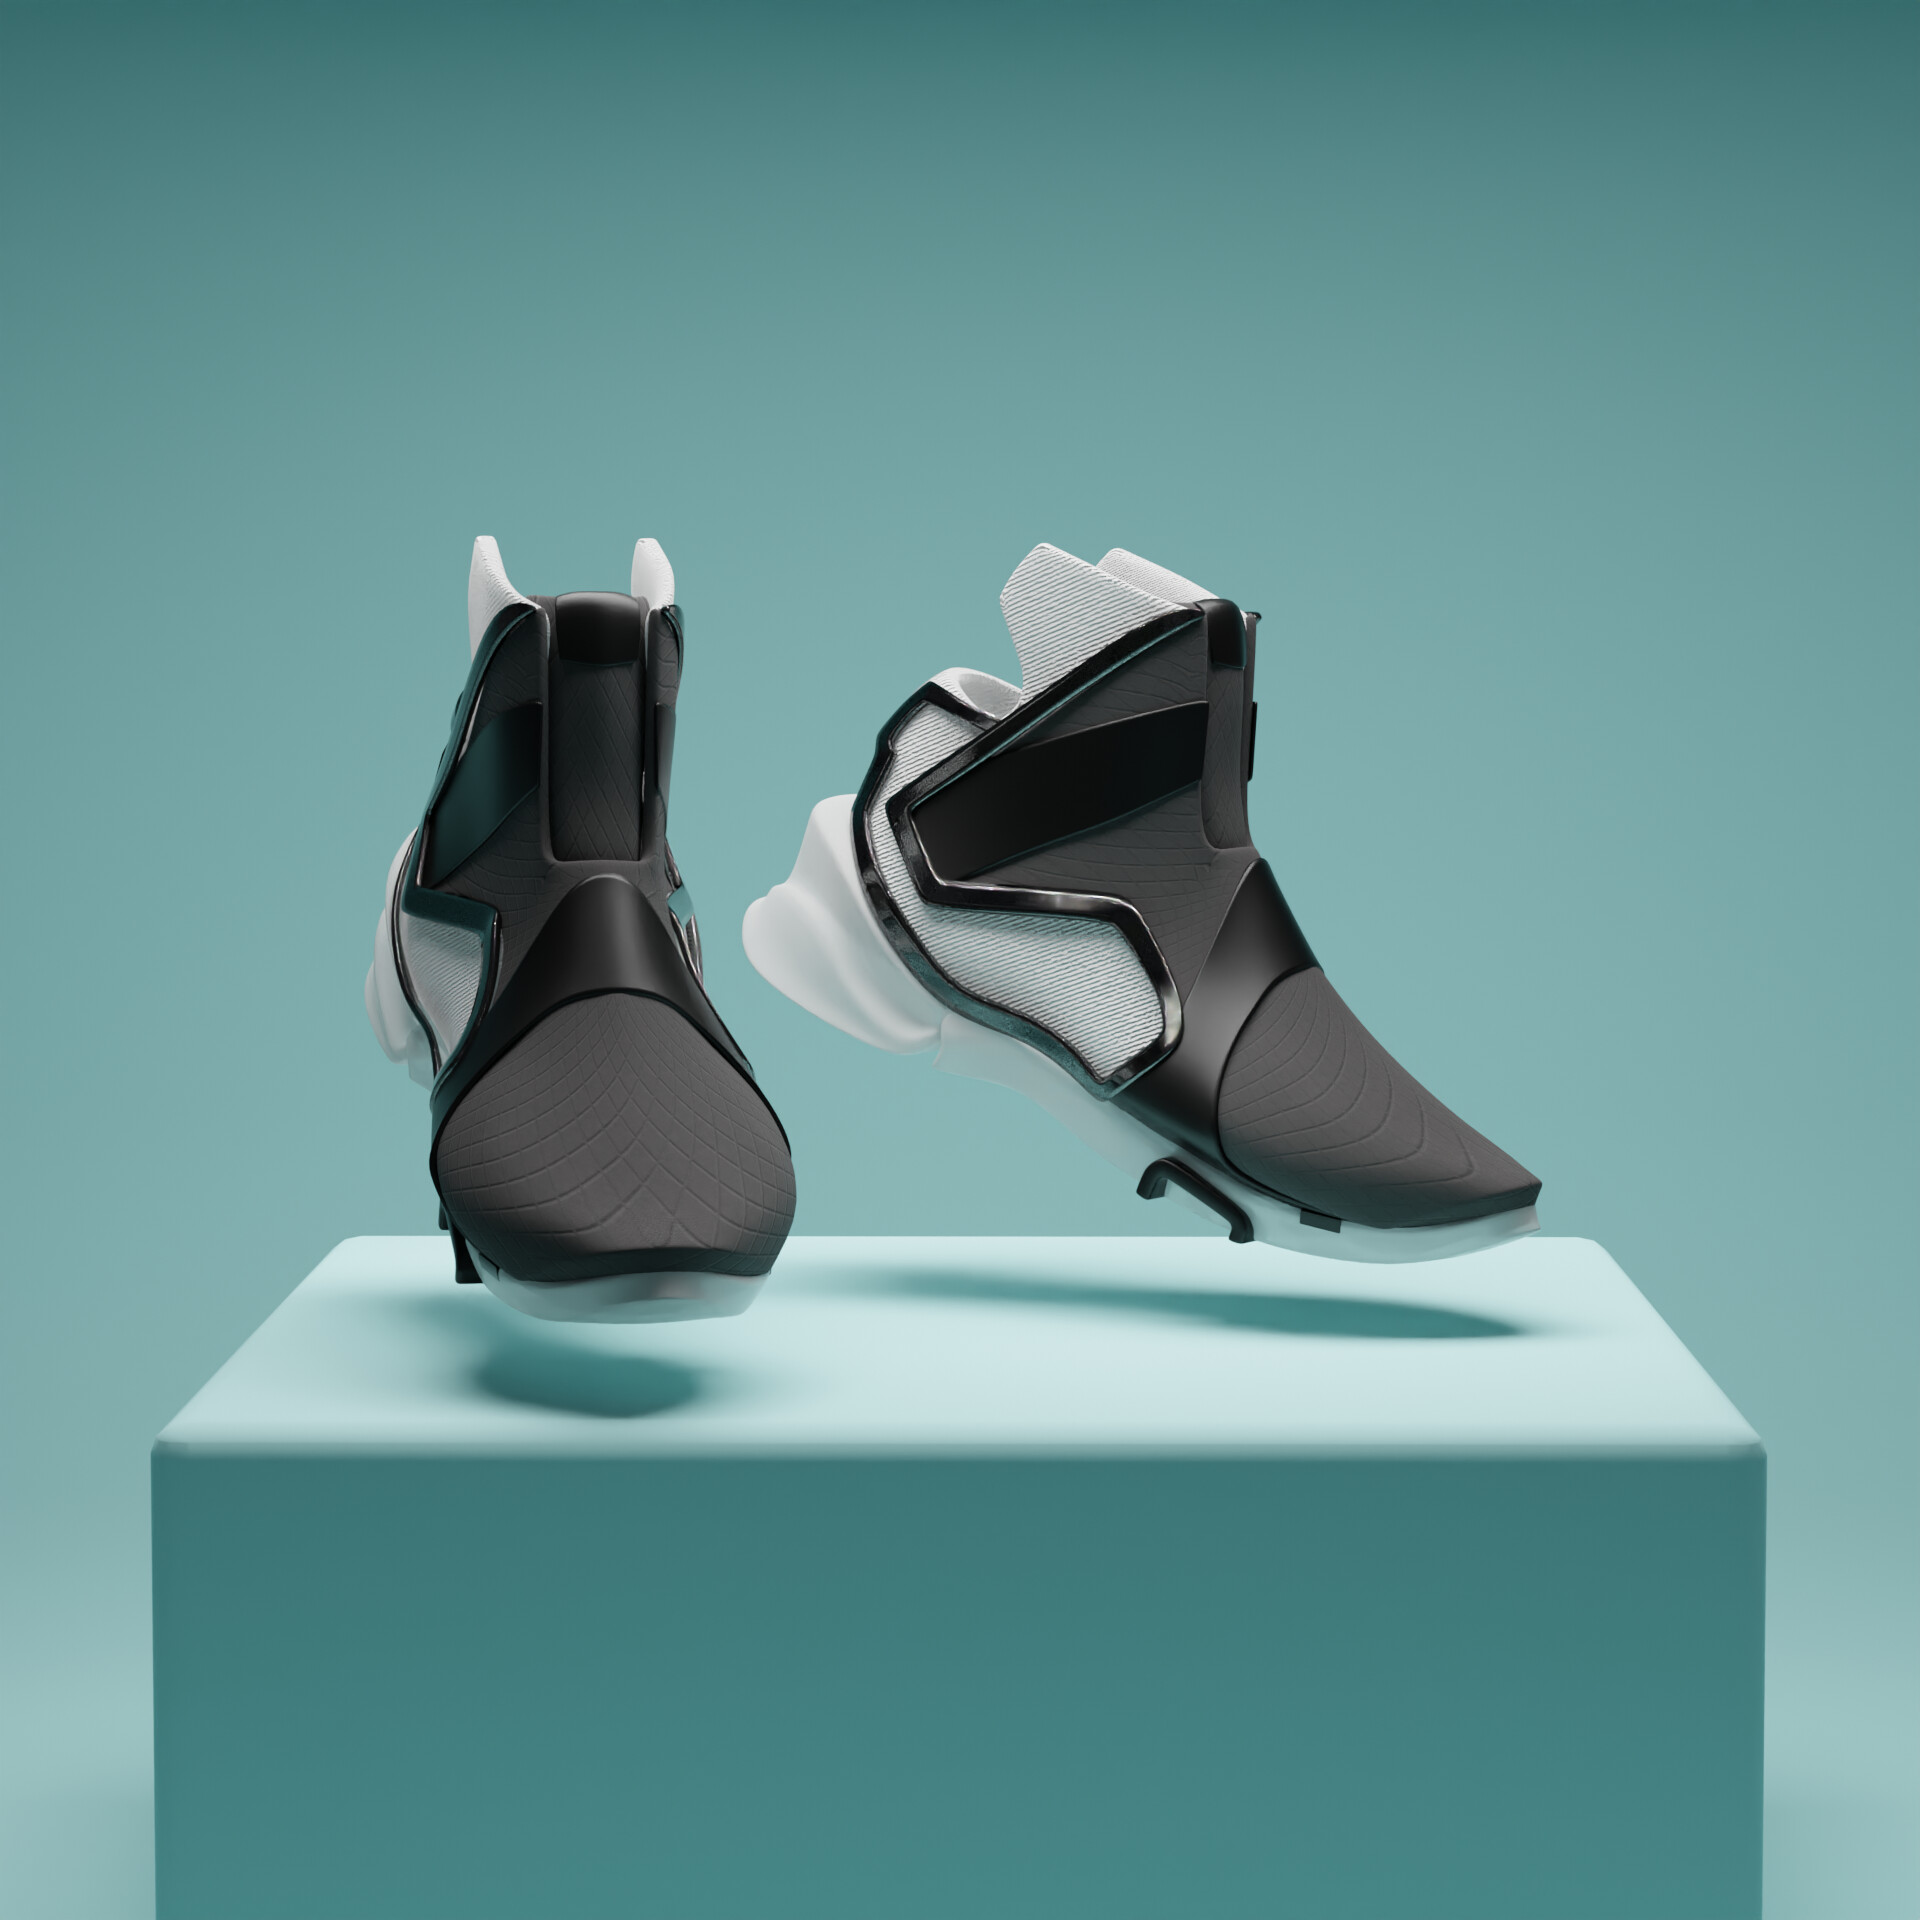 ArtStation - Concept footwear NFT design for Bluxe studio